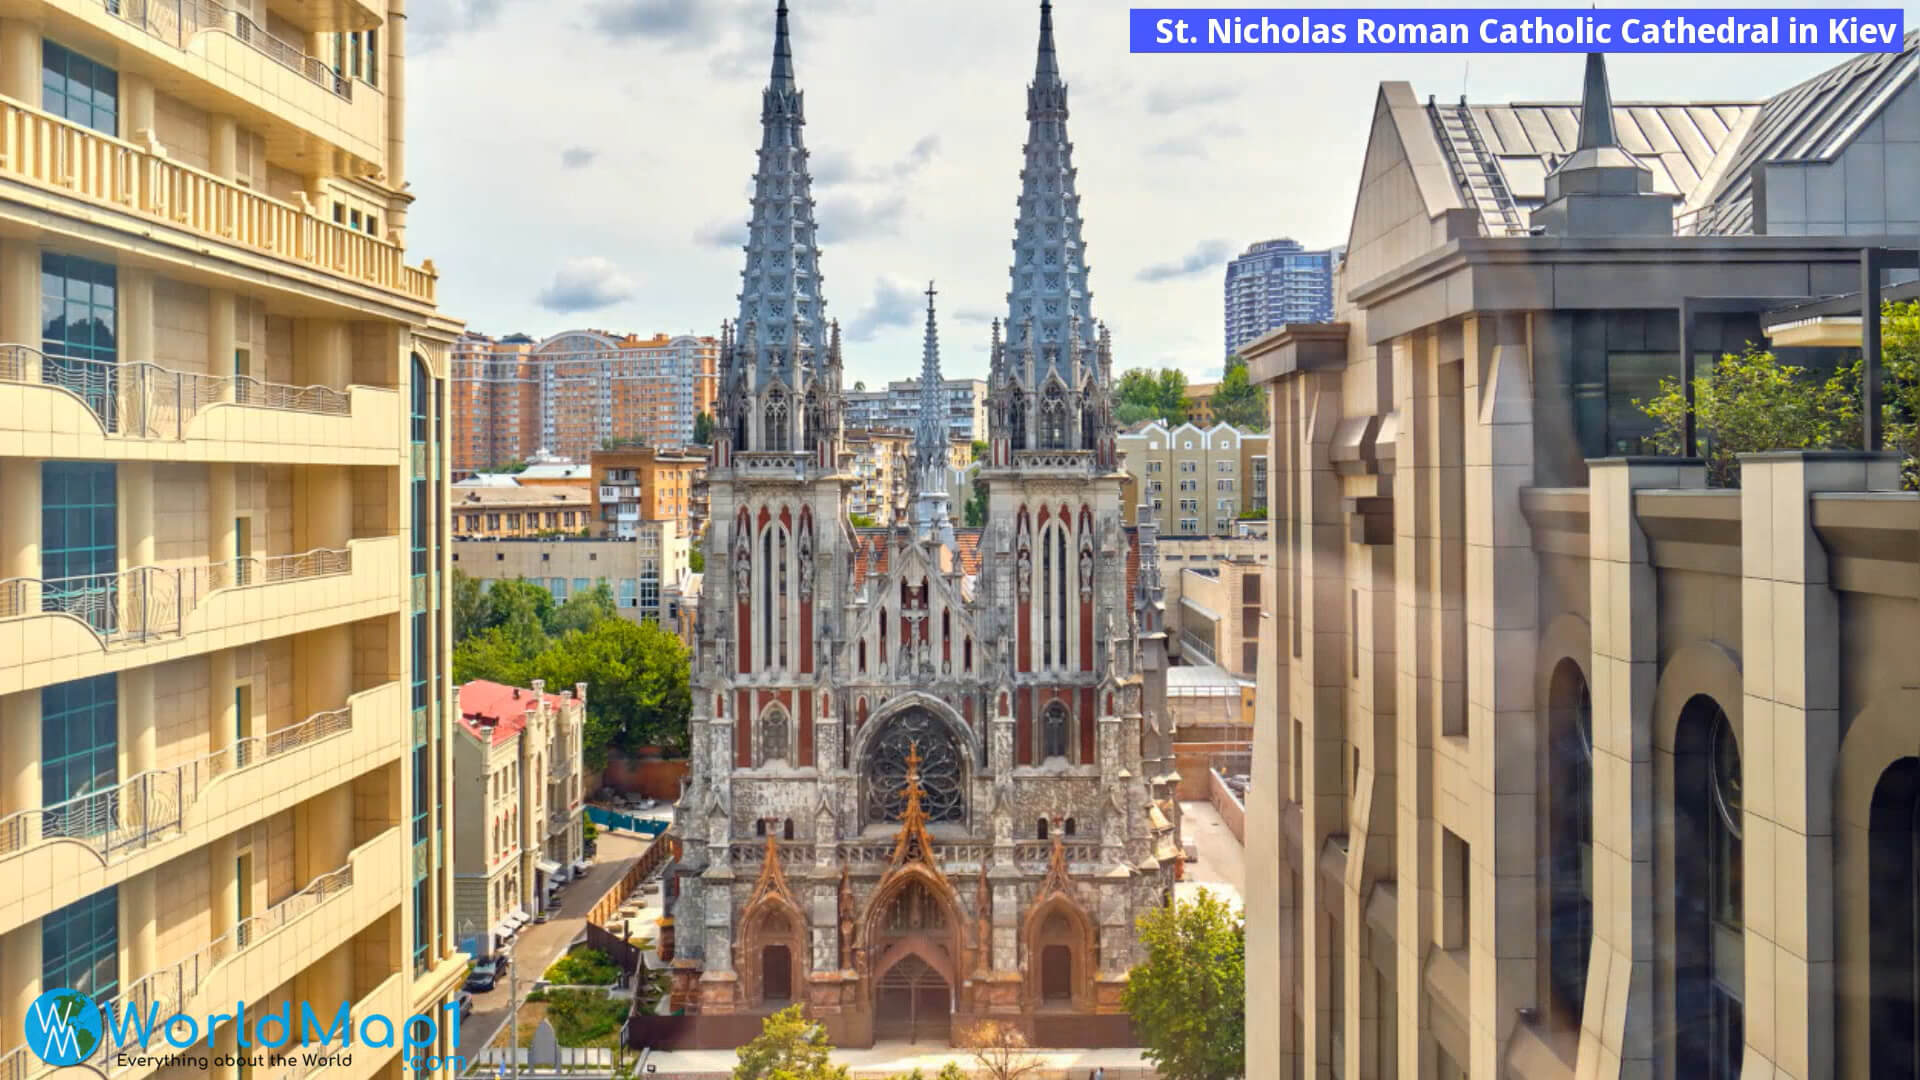 St Nicholas Roman Catholic Cathedral in Kiev